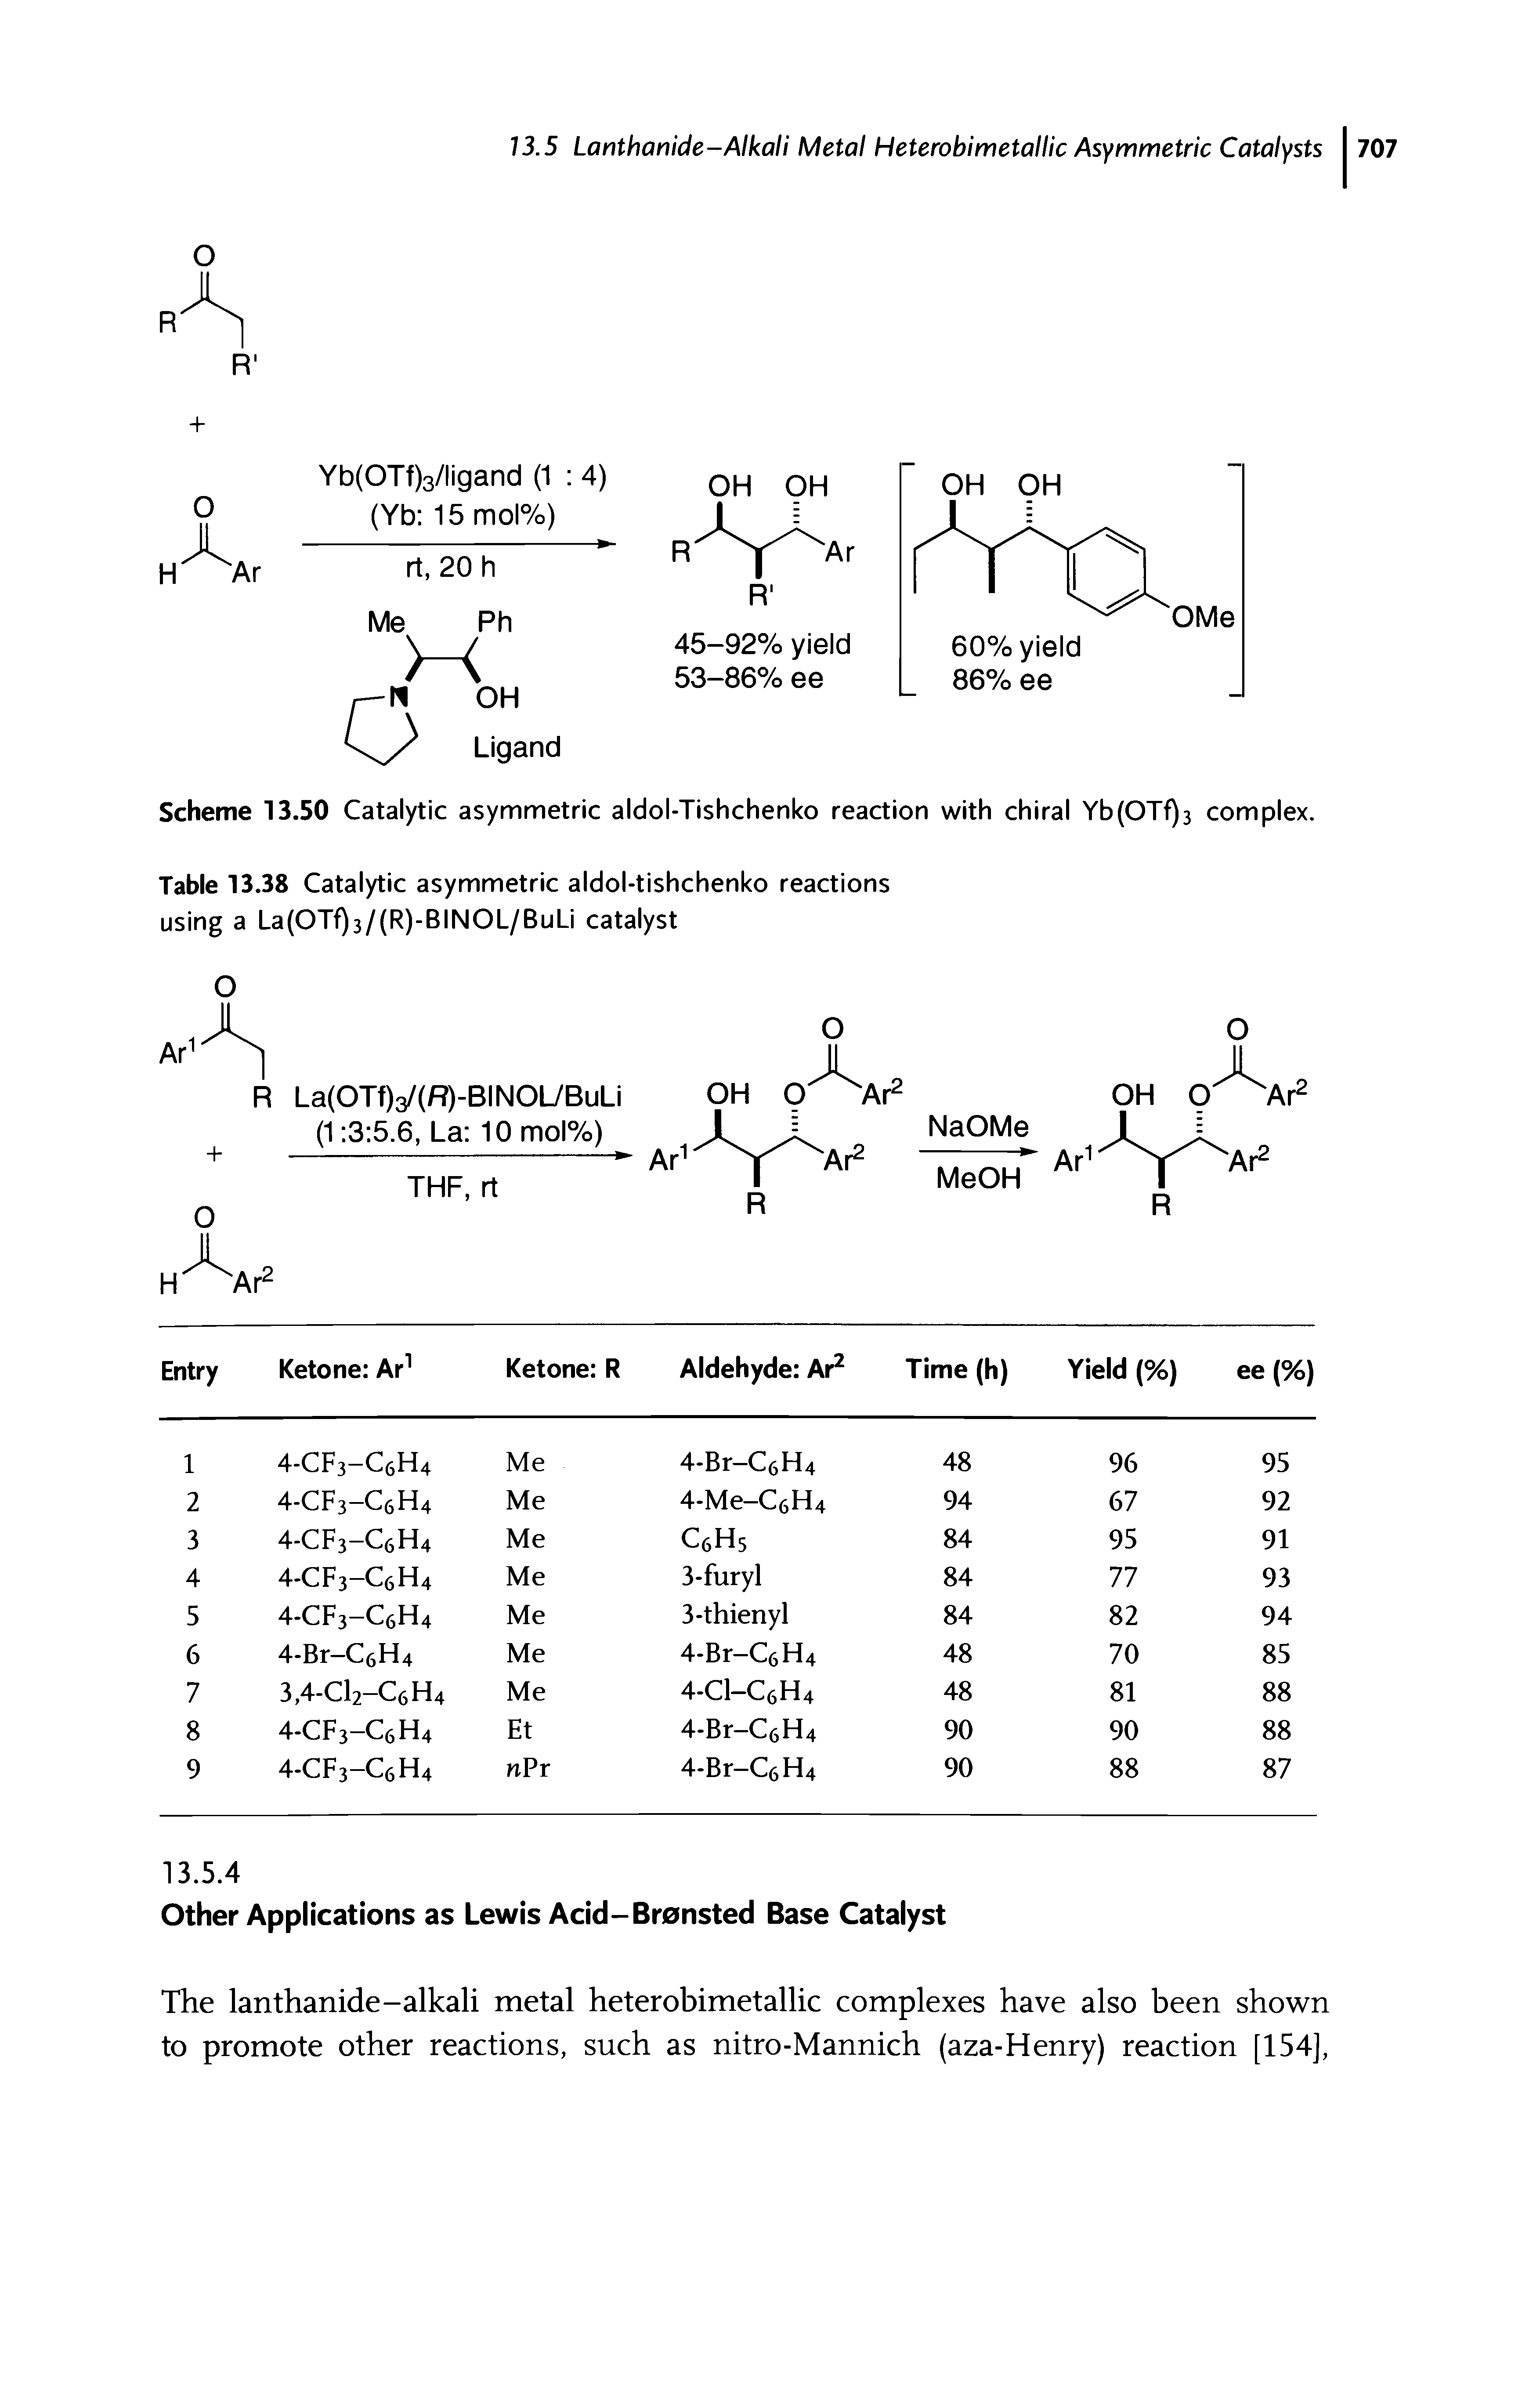 Table 13.38 Catalytic asymmetric aldol-tishchenko reactions using a La(OTf)3/(R)-BINOL/BuLi catalyst...